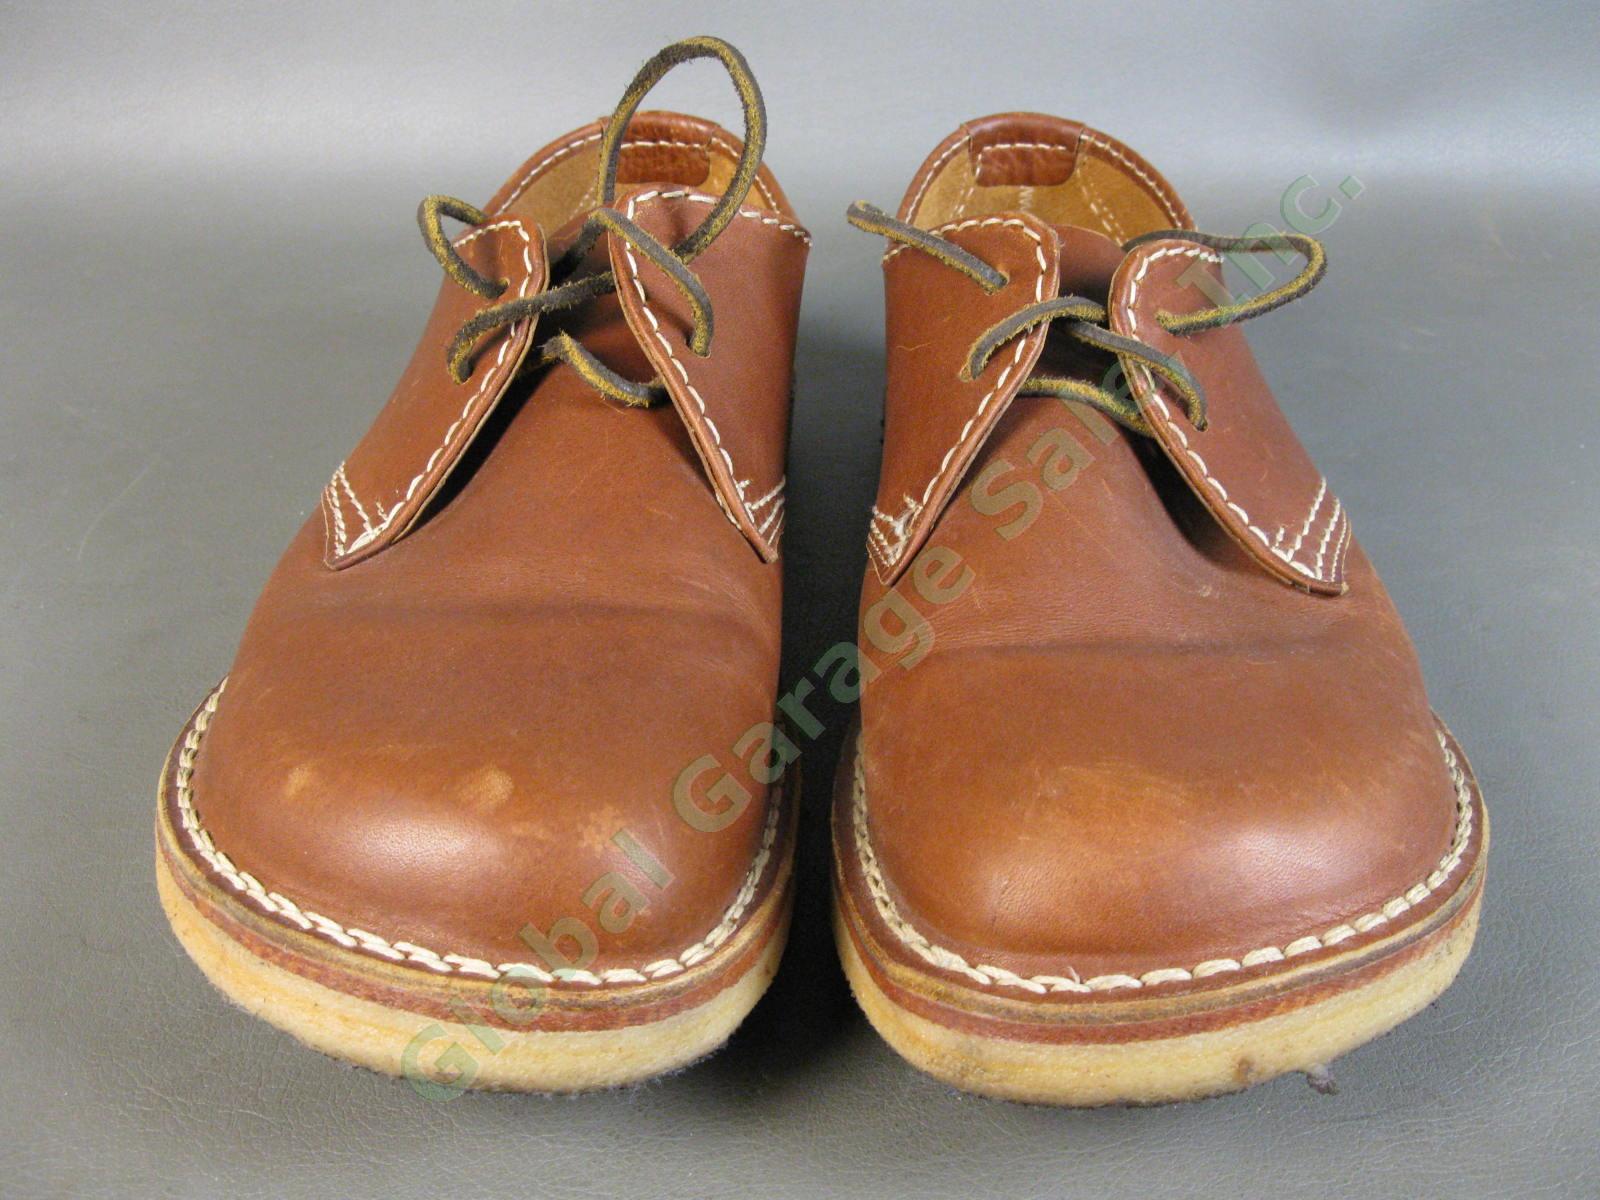 Original Danish Duckfeet Jylland EU 44 Brown Leather Lace Up Derby Shoes US 10.5 3